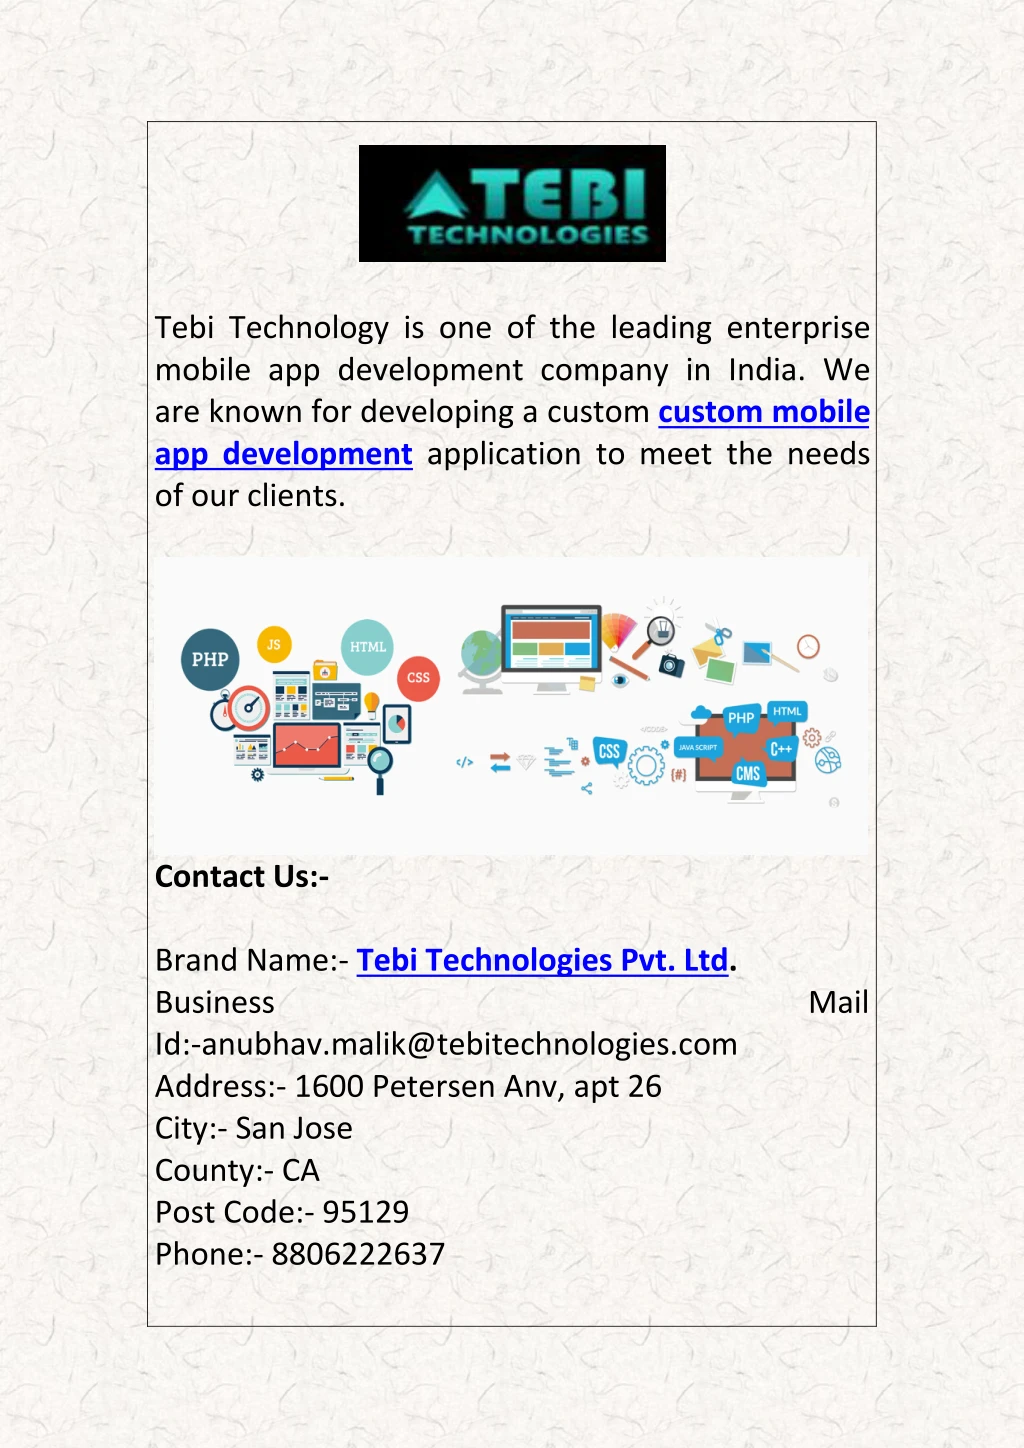 tebi technology is one of the leading enterprise